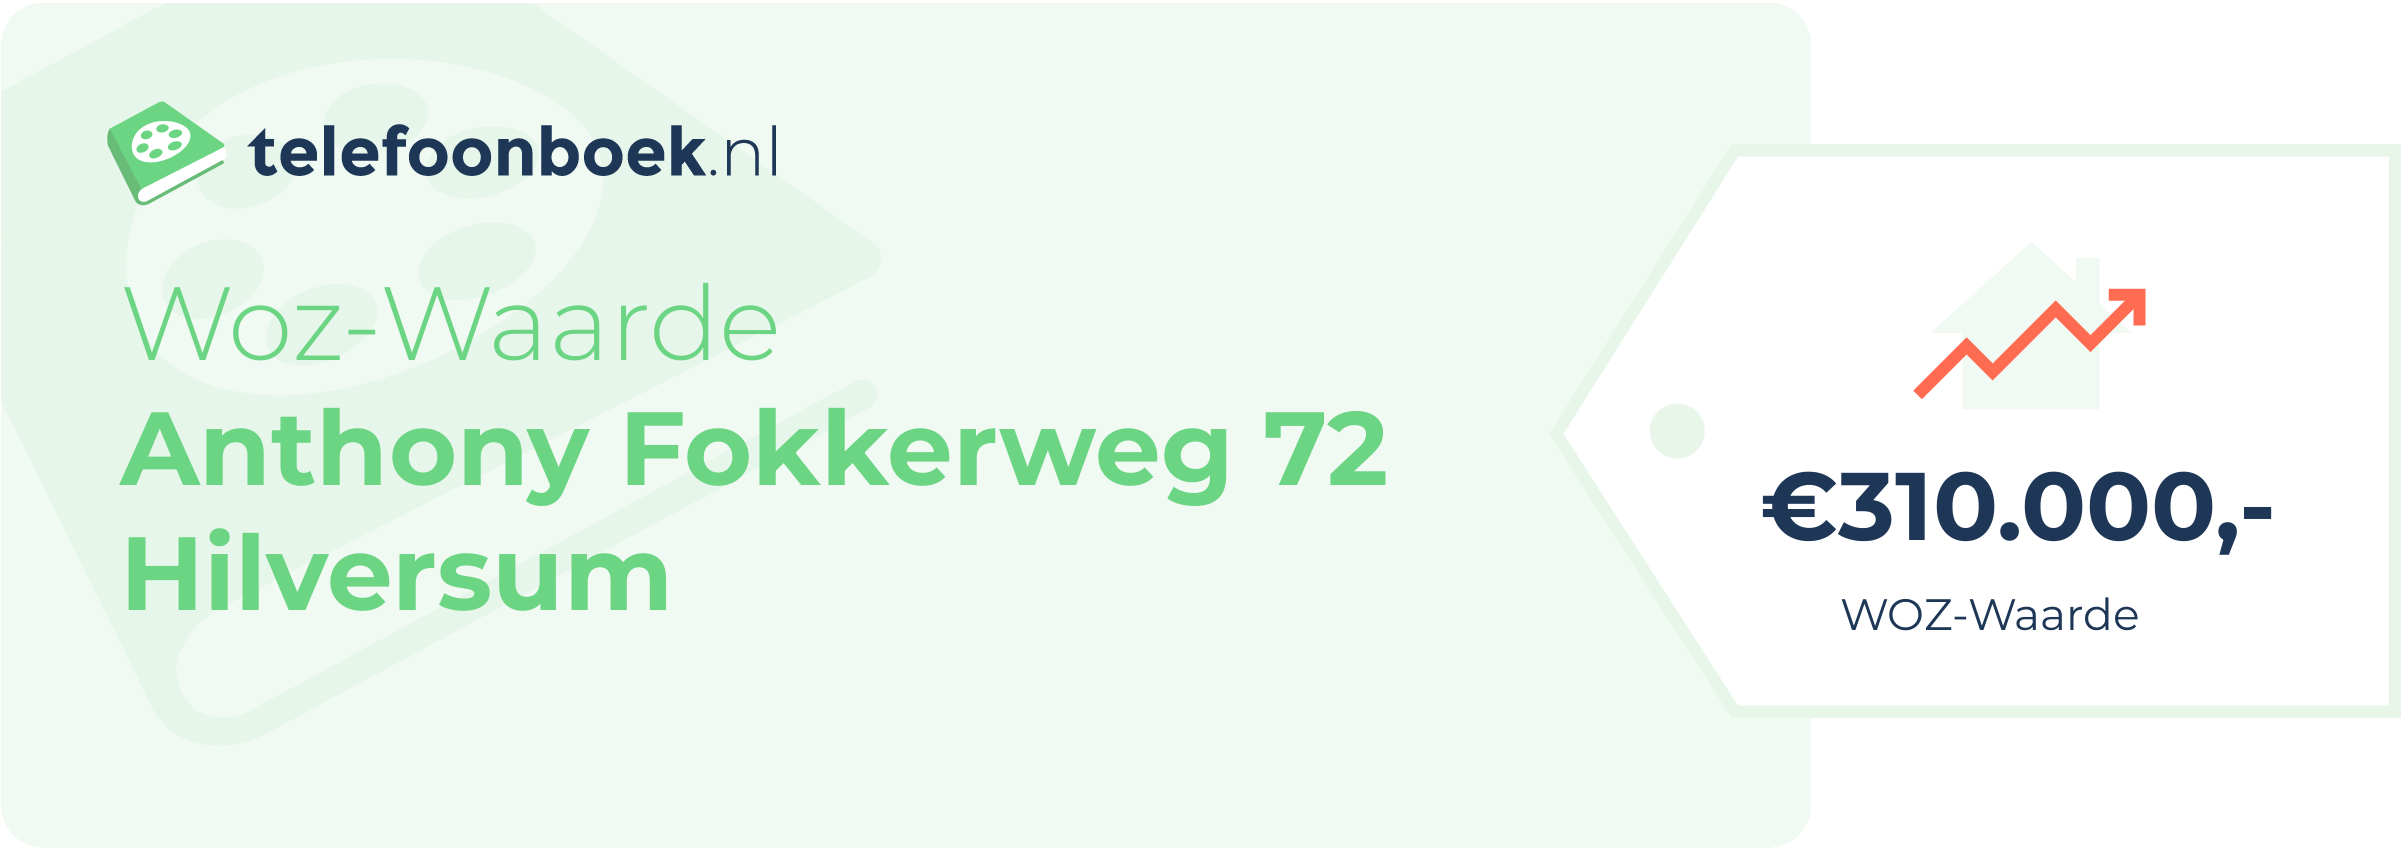 WOZ-waarde Anthony Fokkerweg 72 Hilversum